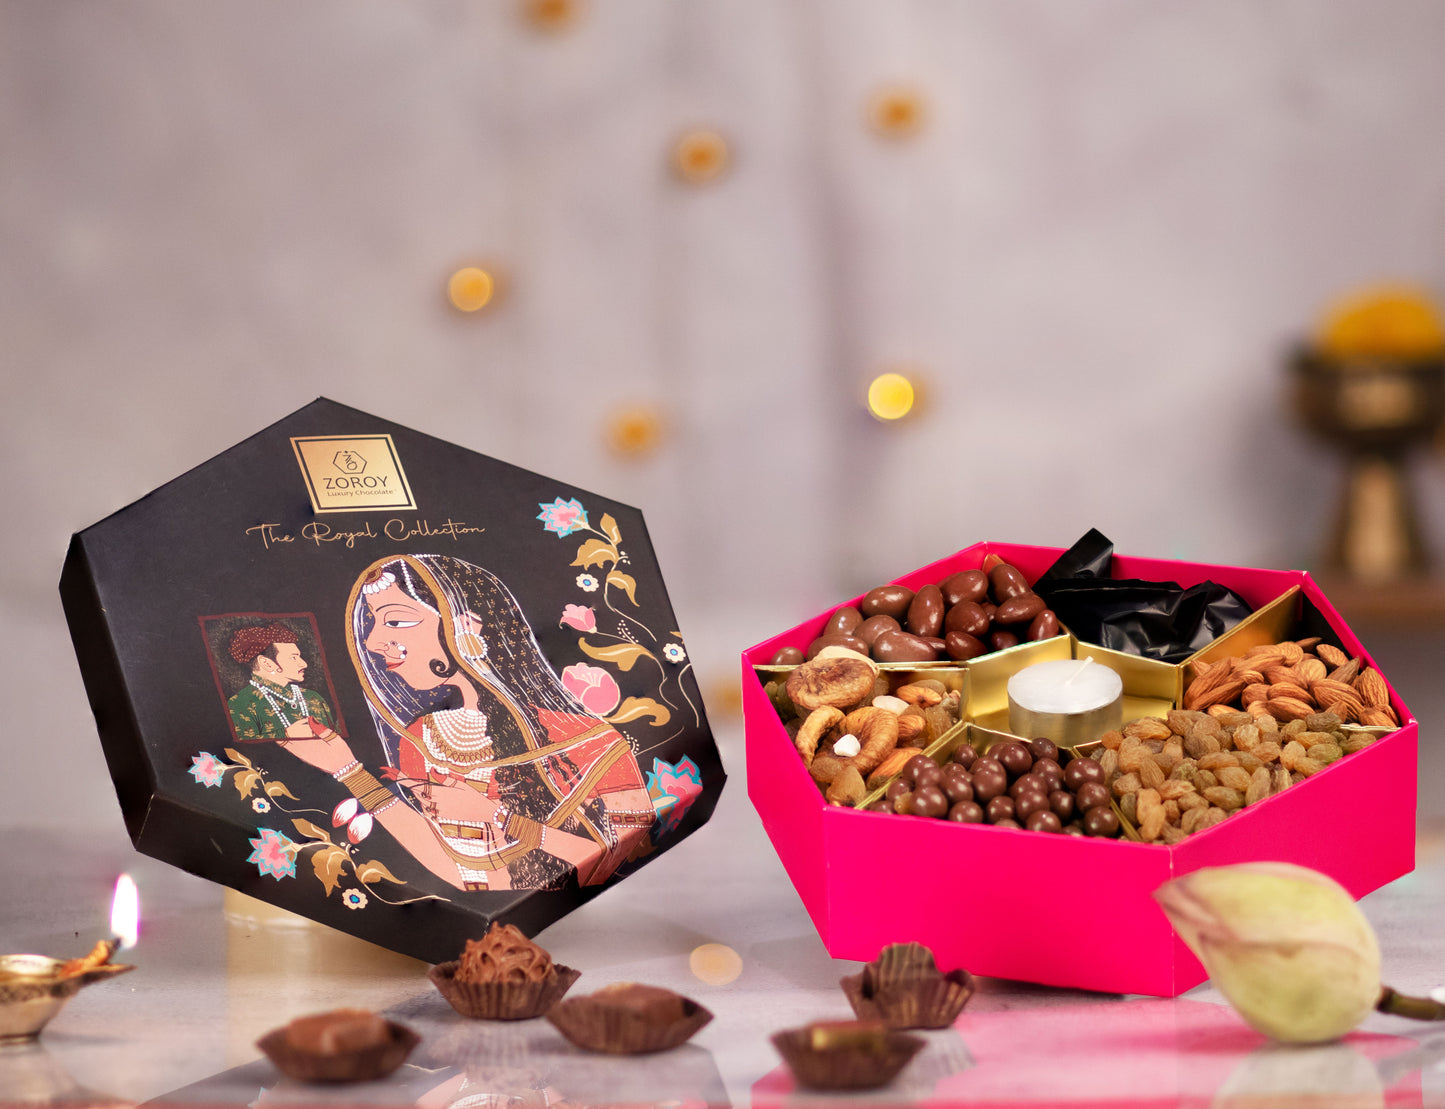 ZOROY Luxury Chocolate Maharani Hexagon Gift Hamper Combo For Diwali Corporate Birthday Weeding Christmas | Dry fruits asortment | Assorted Chooclates Chocolate coated nuts | T-lite candle | 100% Veg